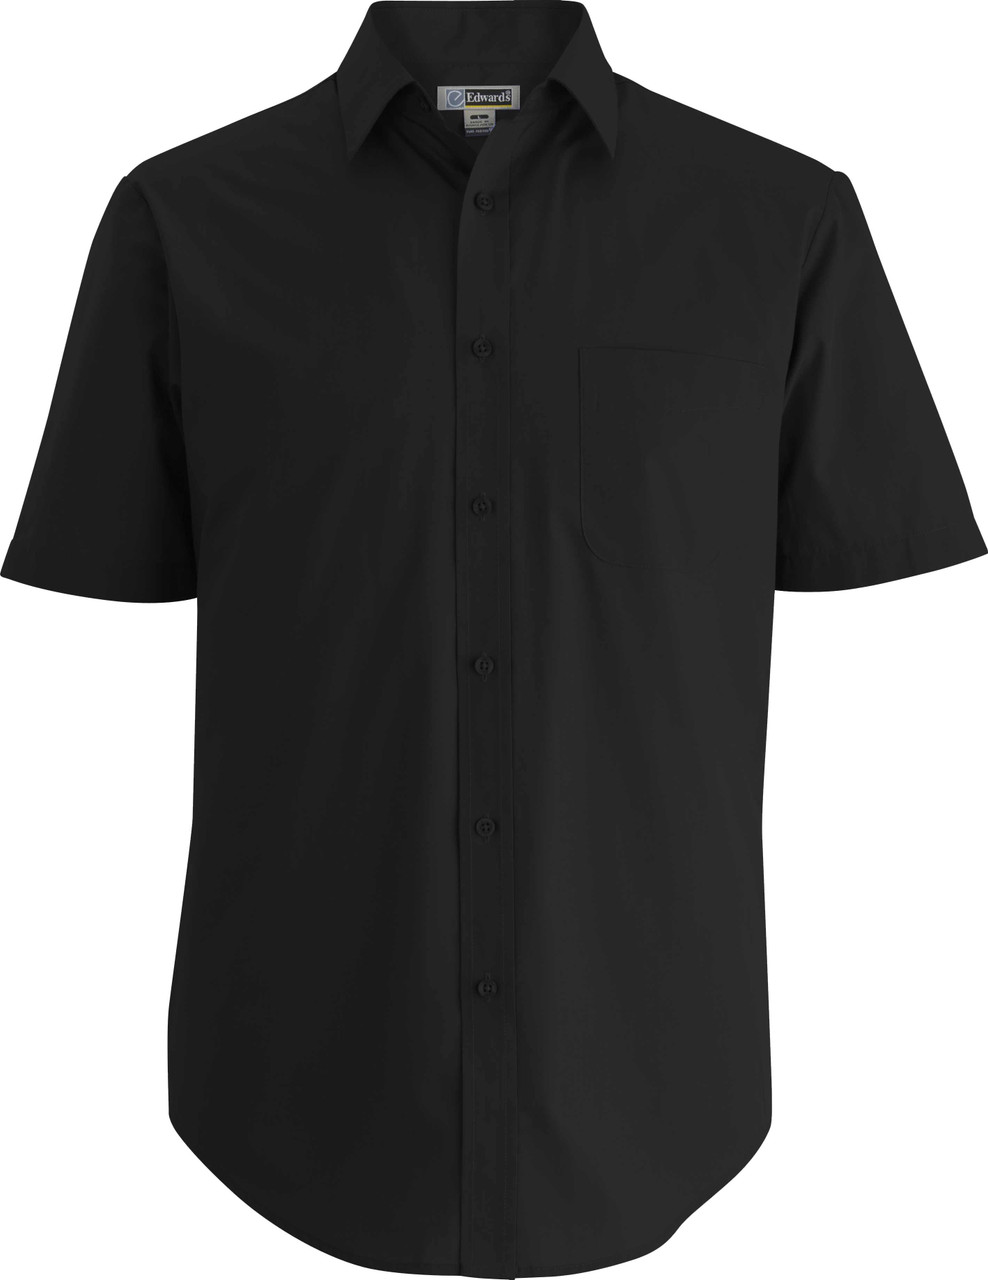 Men's Short Sleeve Essential Uniform Shirt